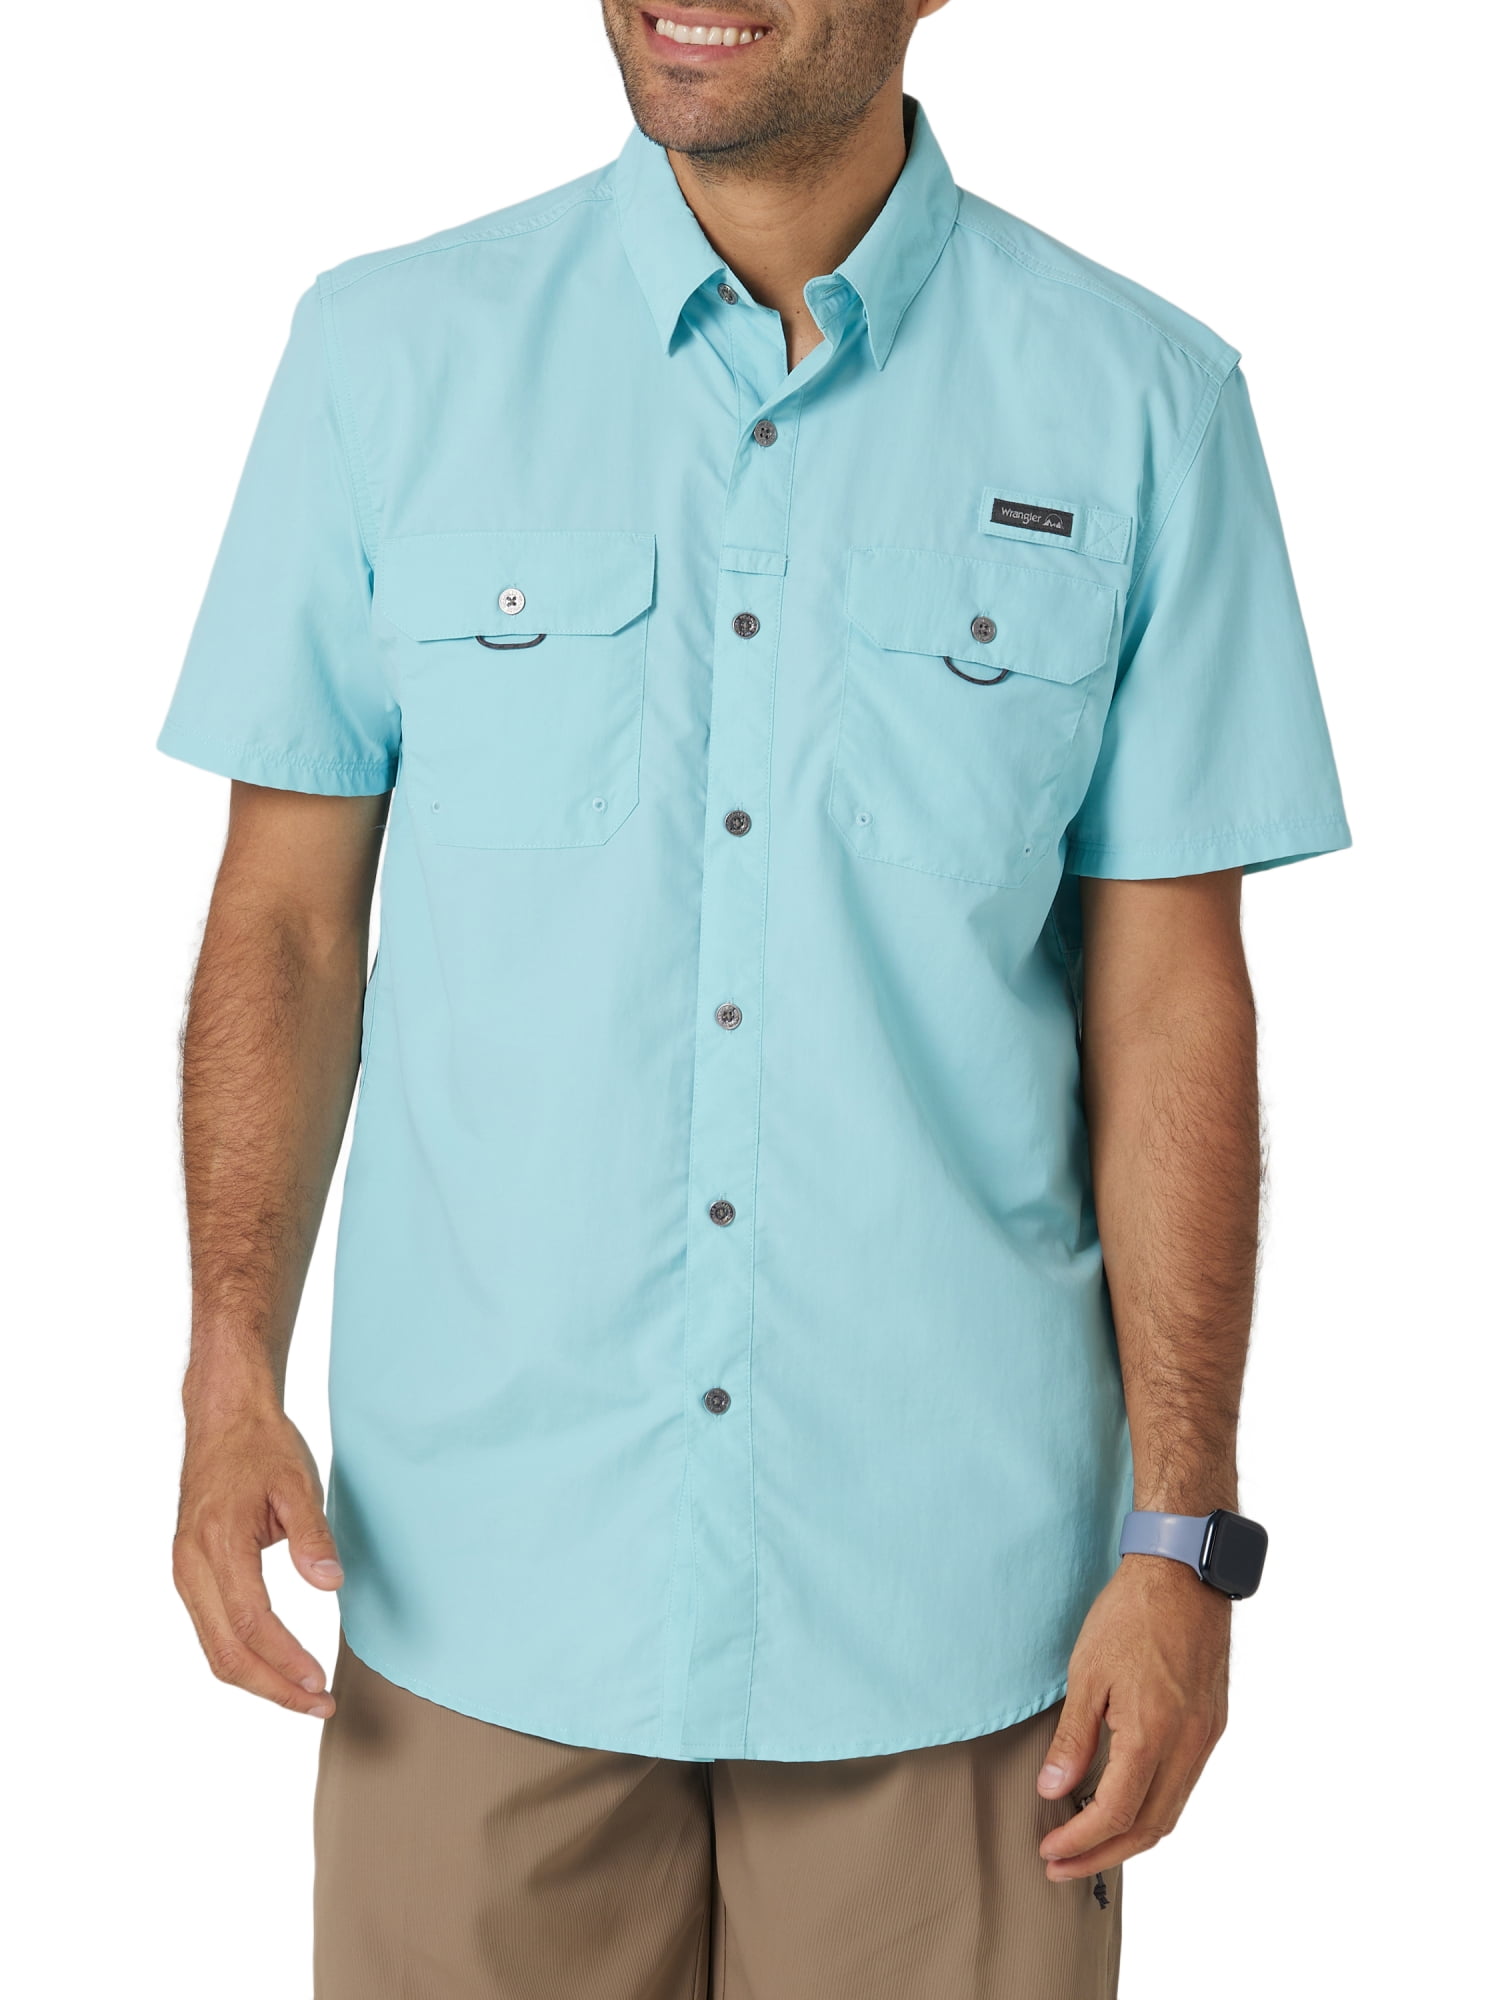 Wrangler Men’s Outdoor Short Sleeve Fishing Shirt with UPF 30+, Sizes S-5XL